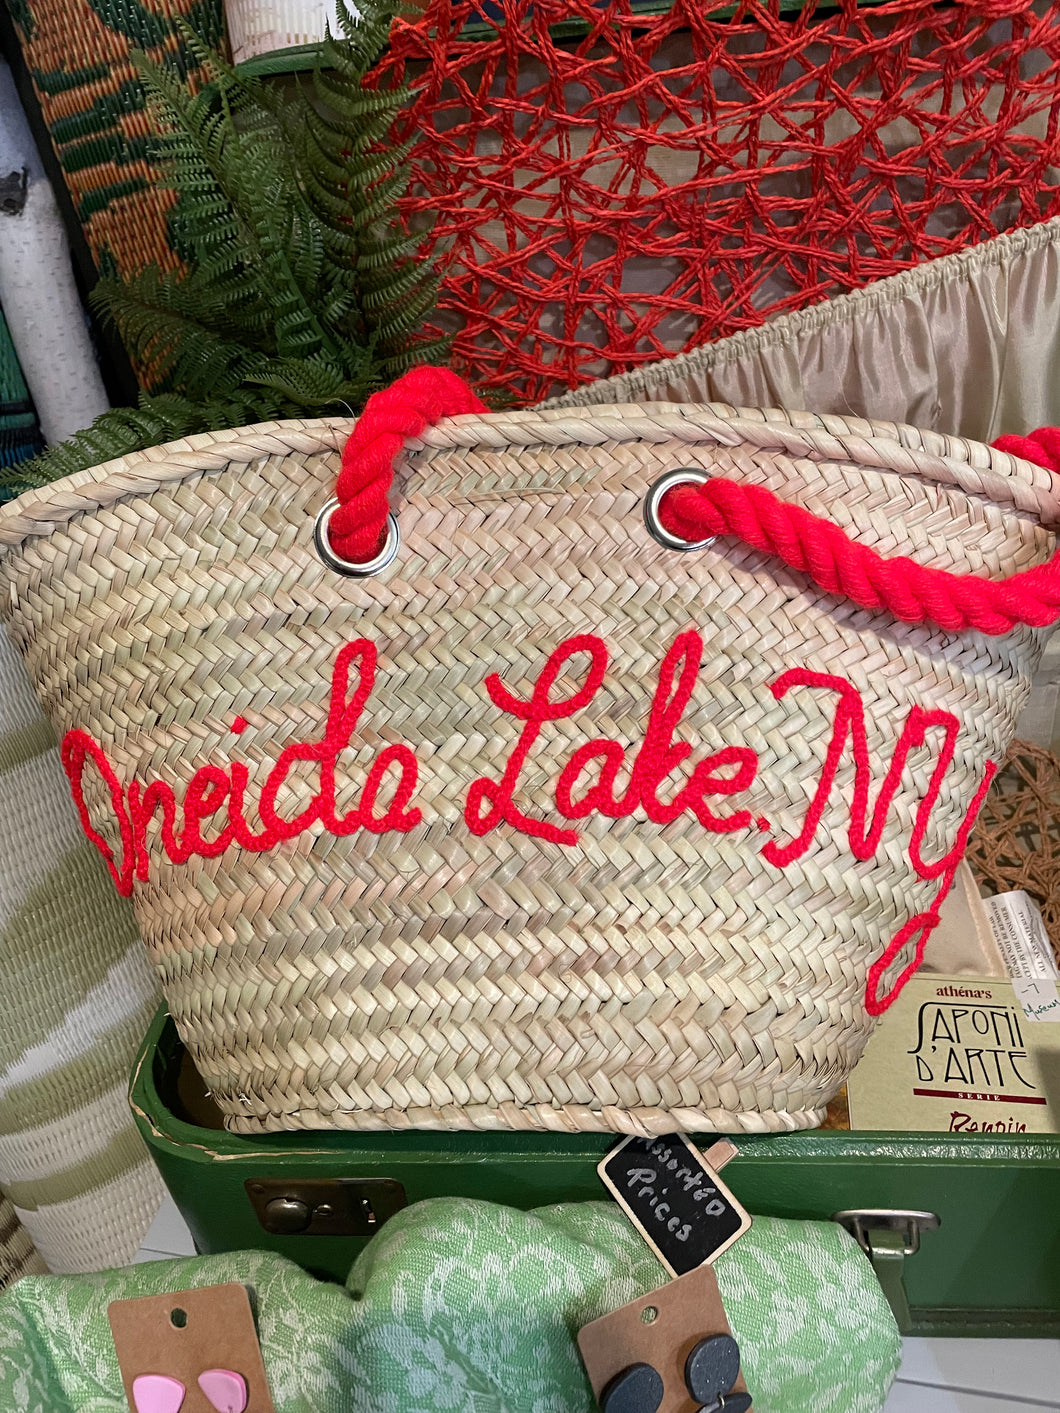 Oneida Lake French Market Basket/Mandarin Orange cords